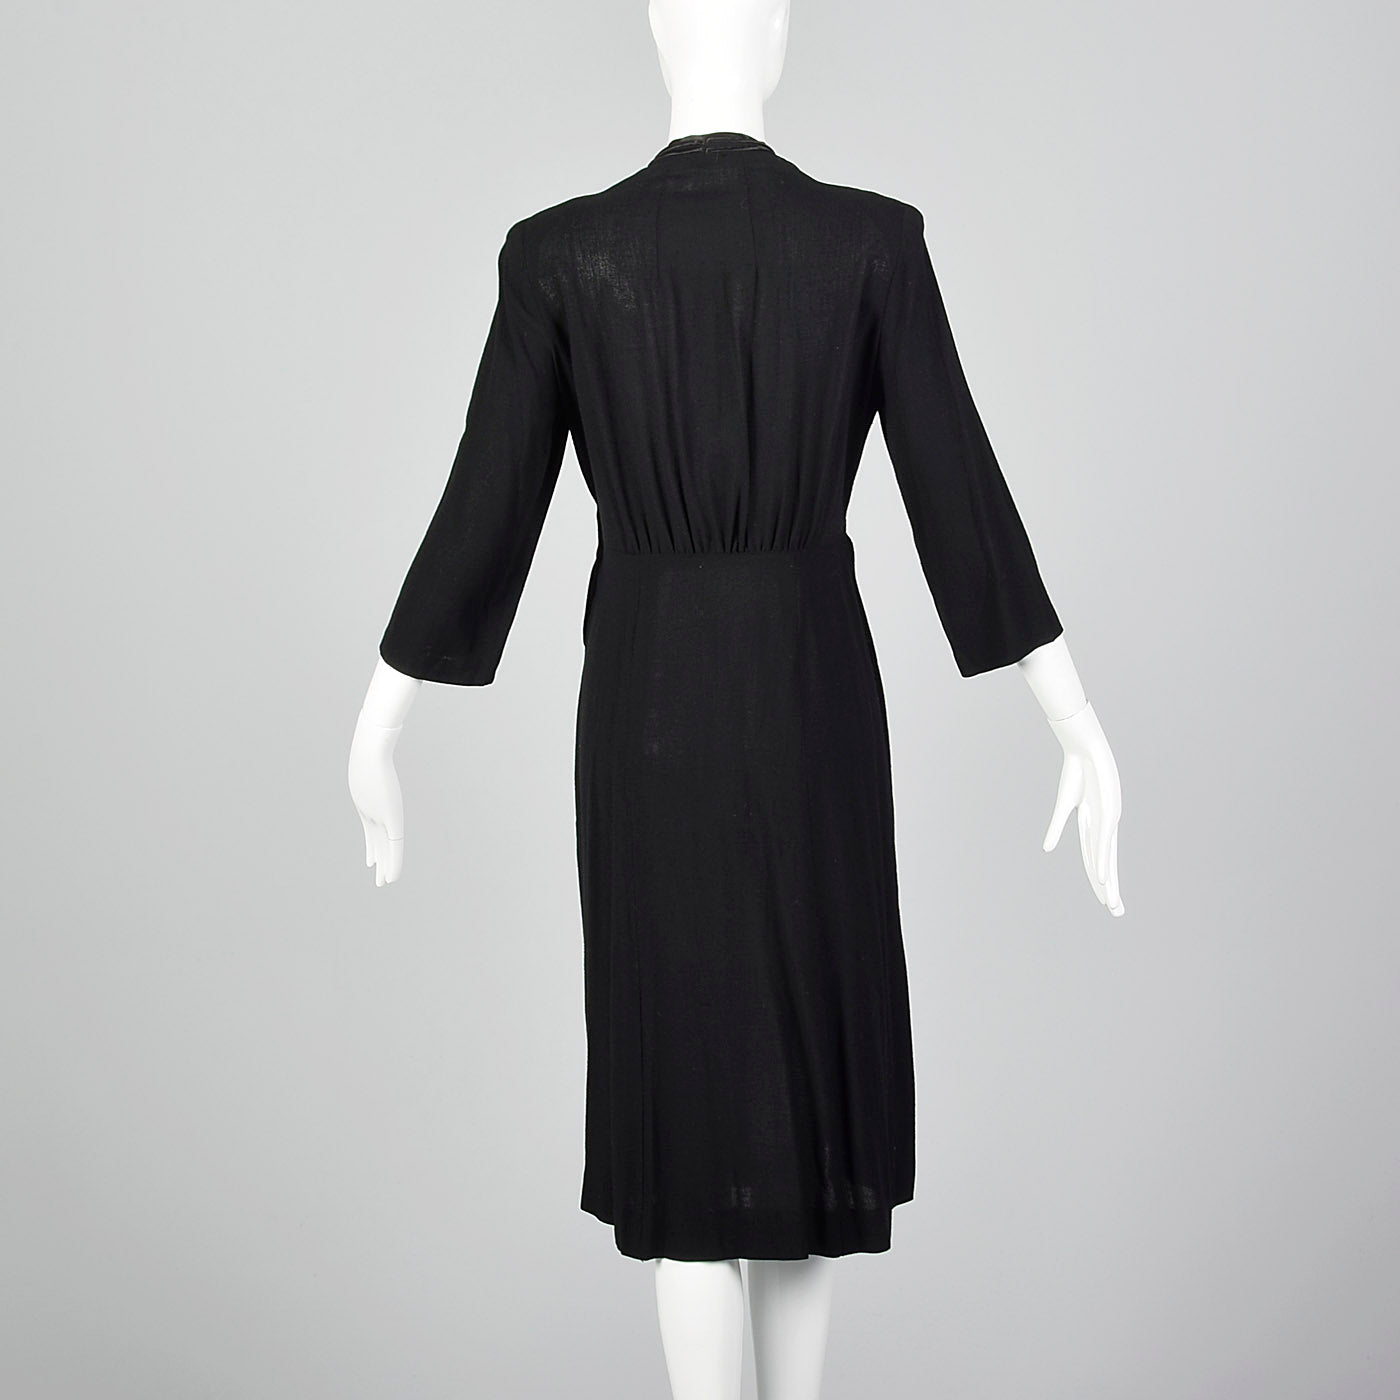 1930s Black Dress with Illusion Jacket